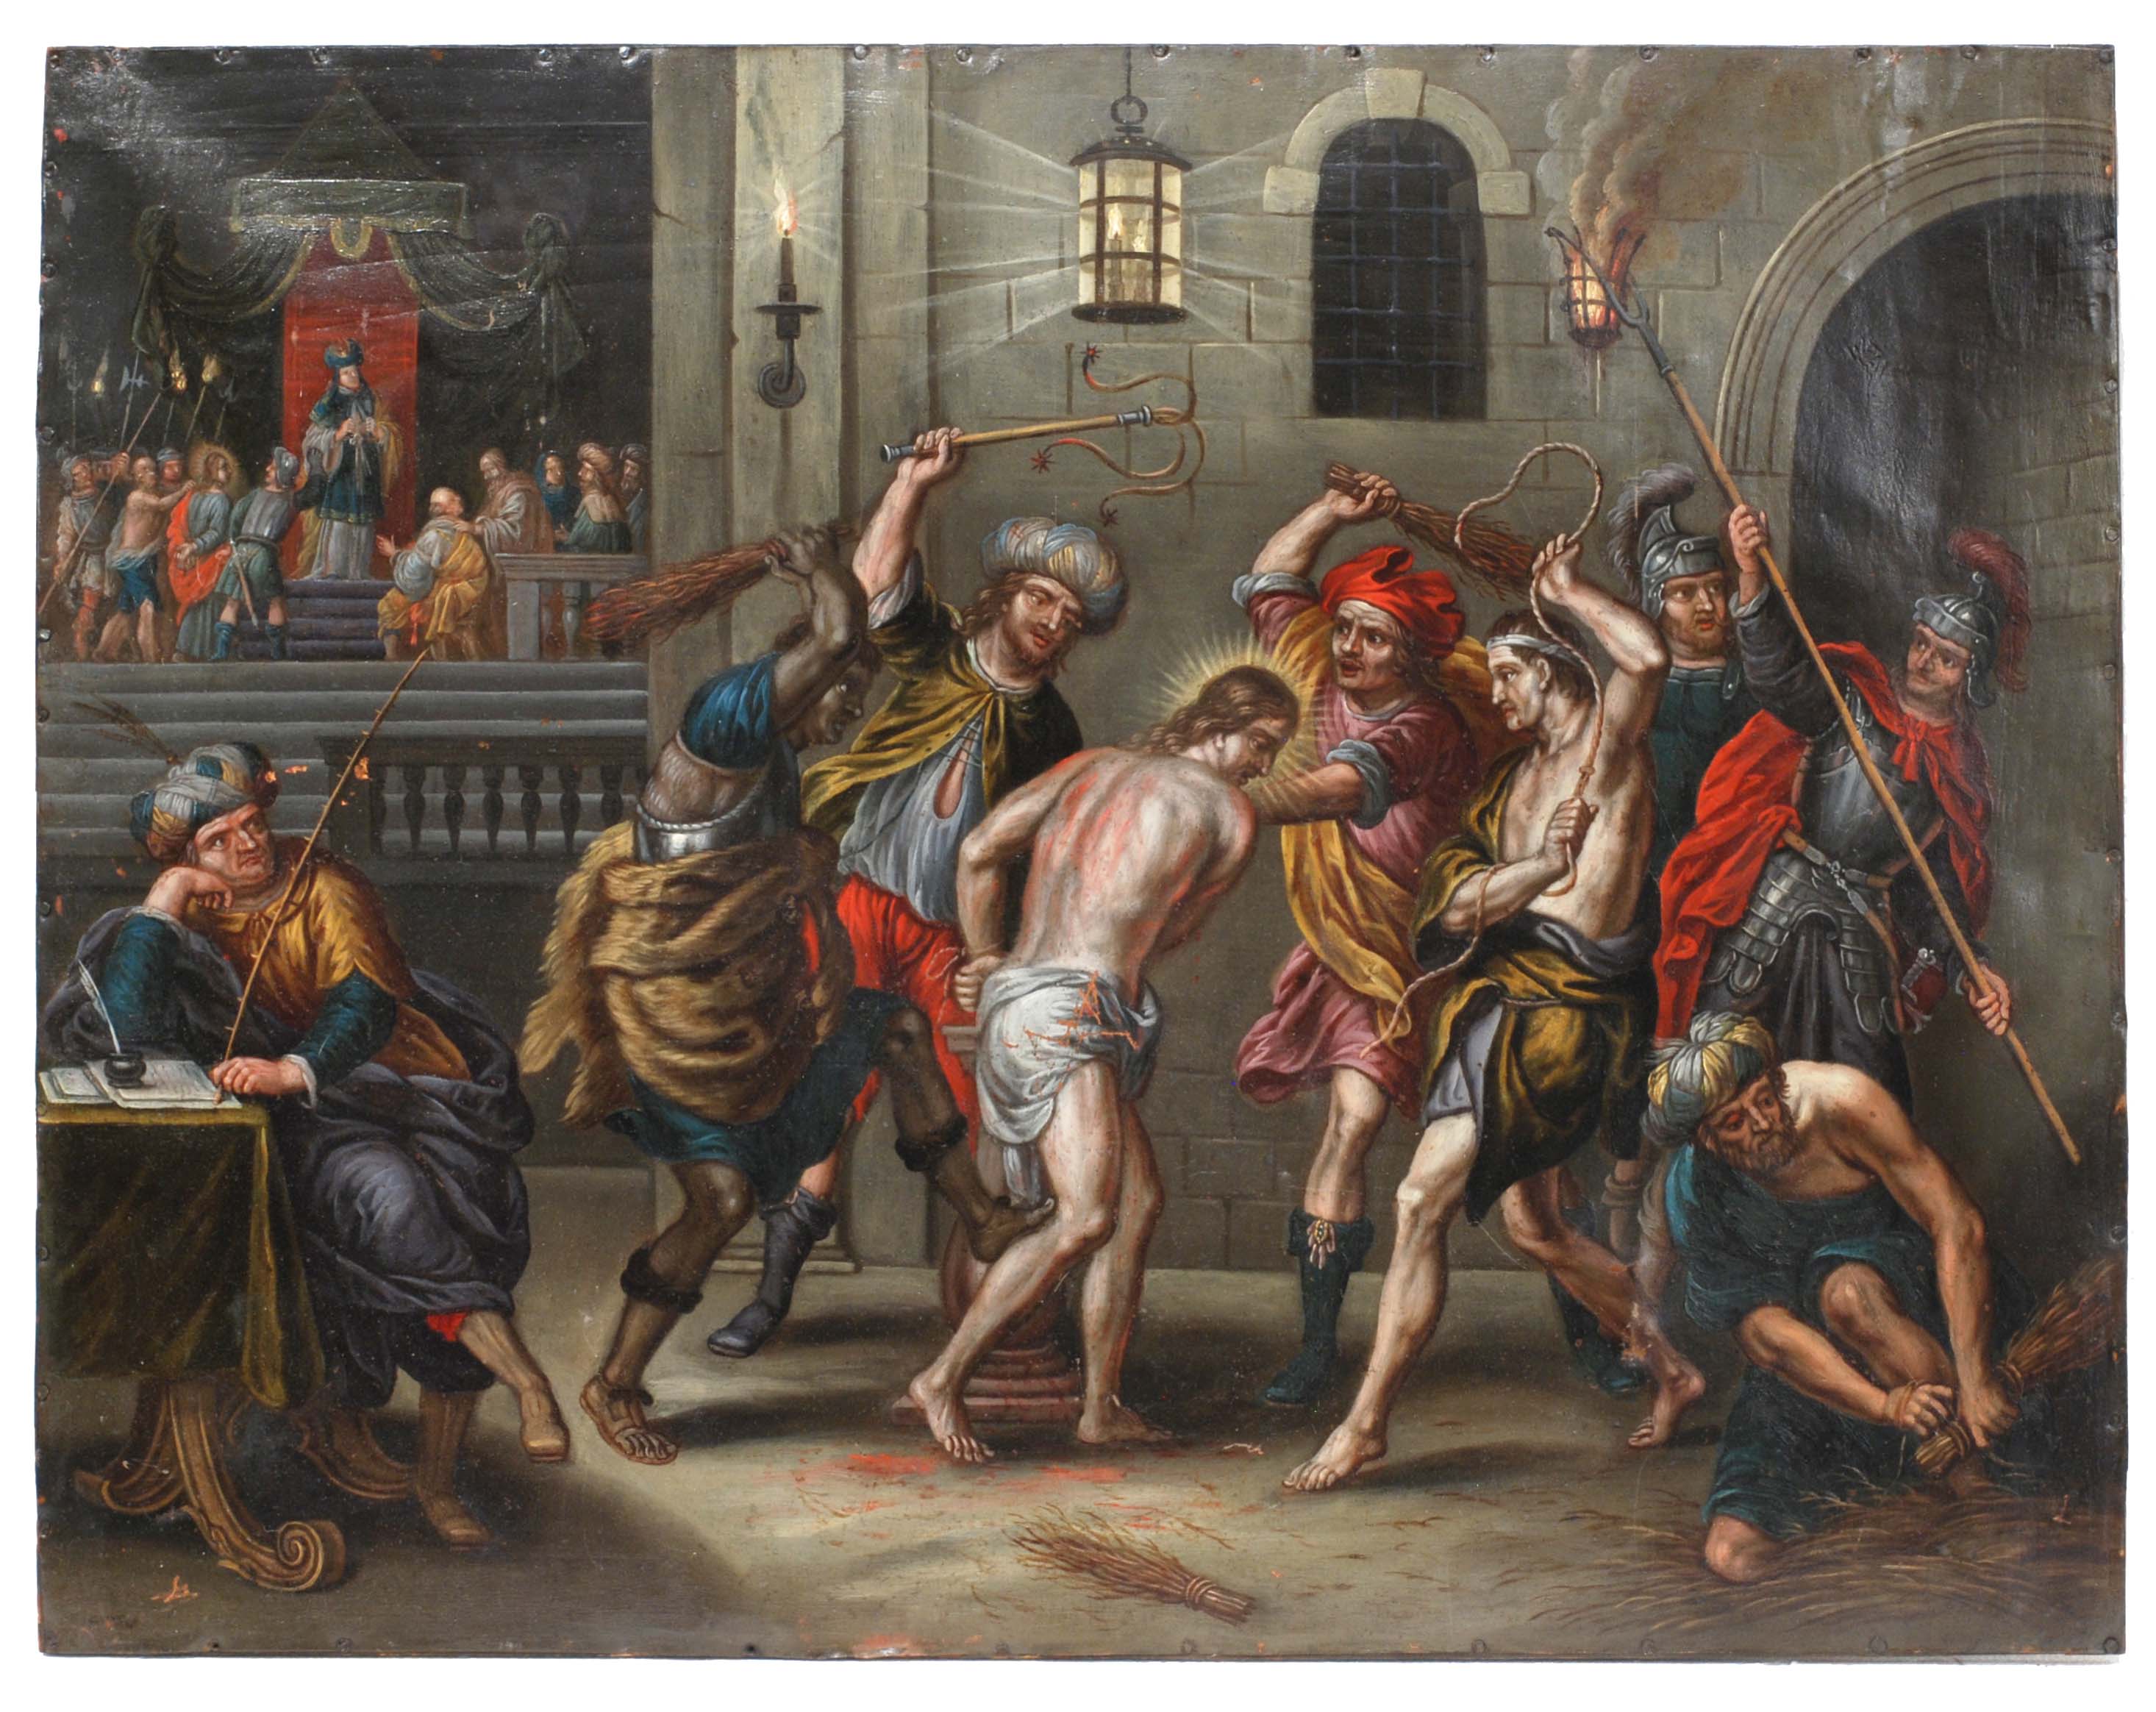 PEETER SION (1624-1695). "Flagelación de Cristo".